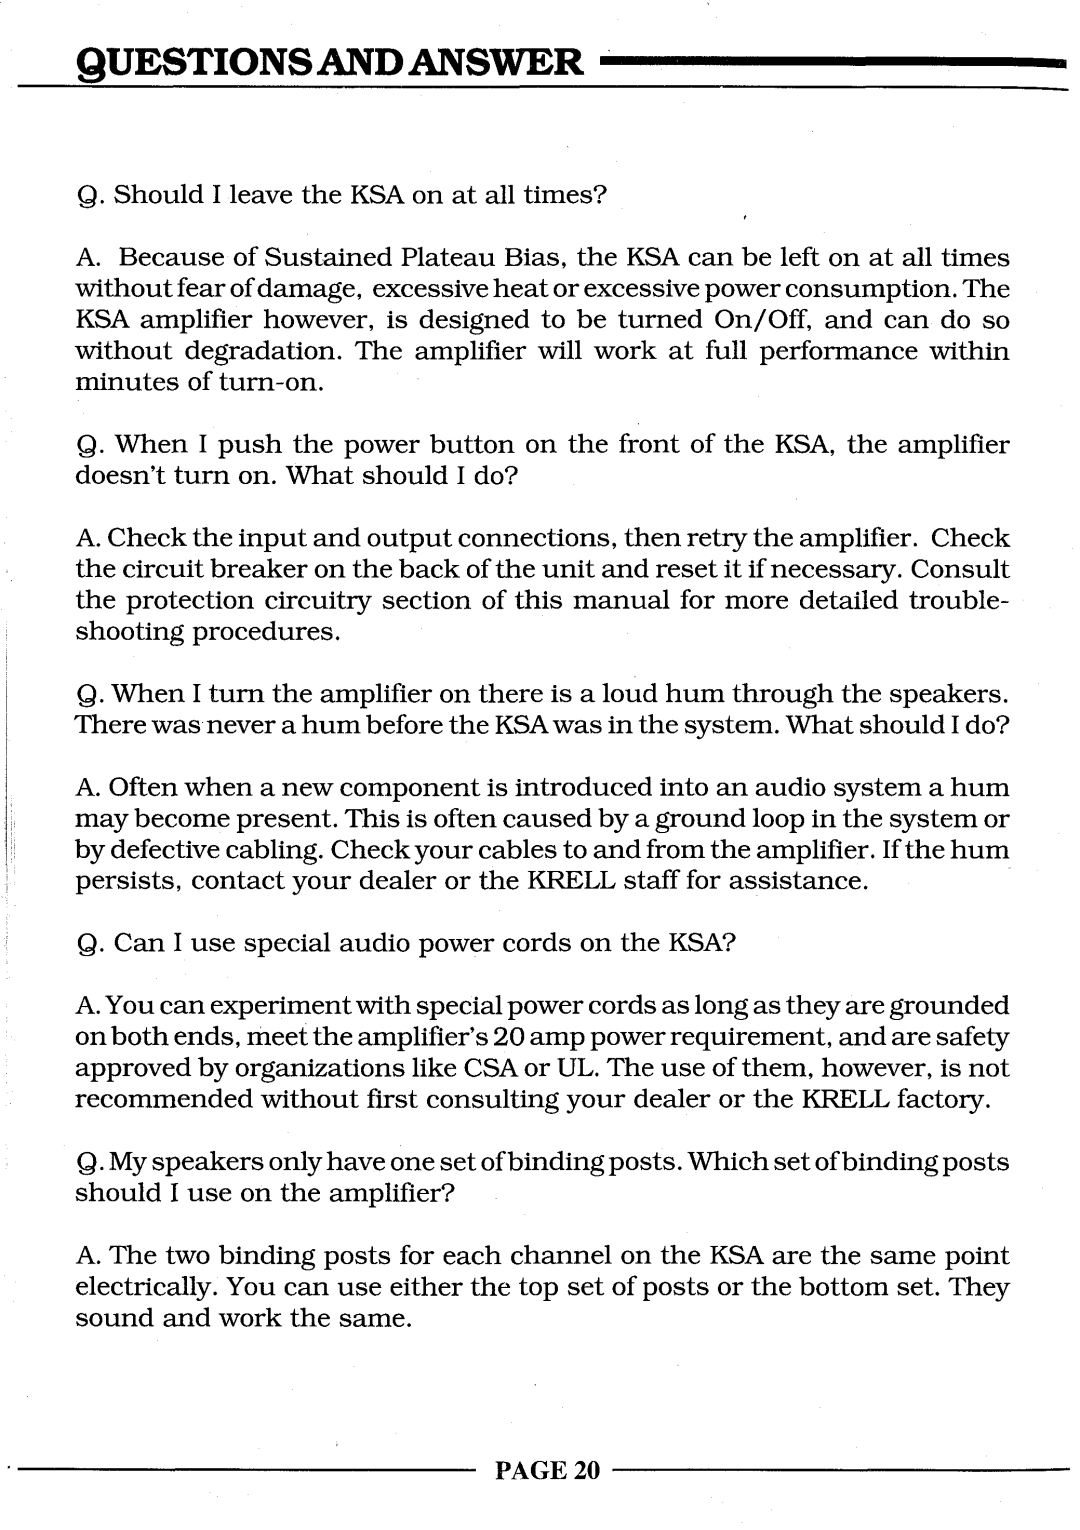 Krell Industries KSA-100S, KSA-200S, KSA-300S manual Questions And Answer, Page 